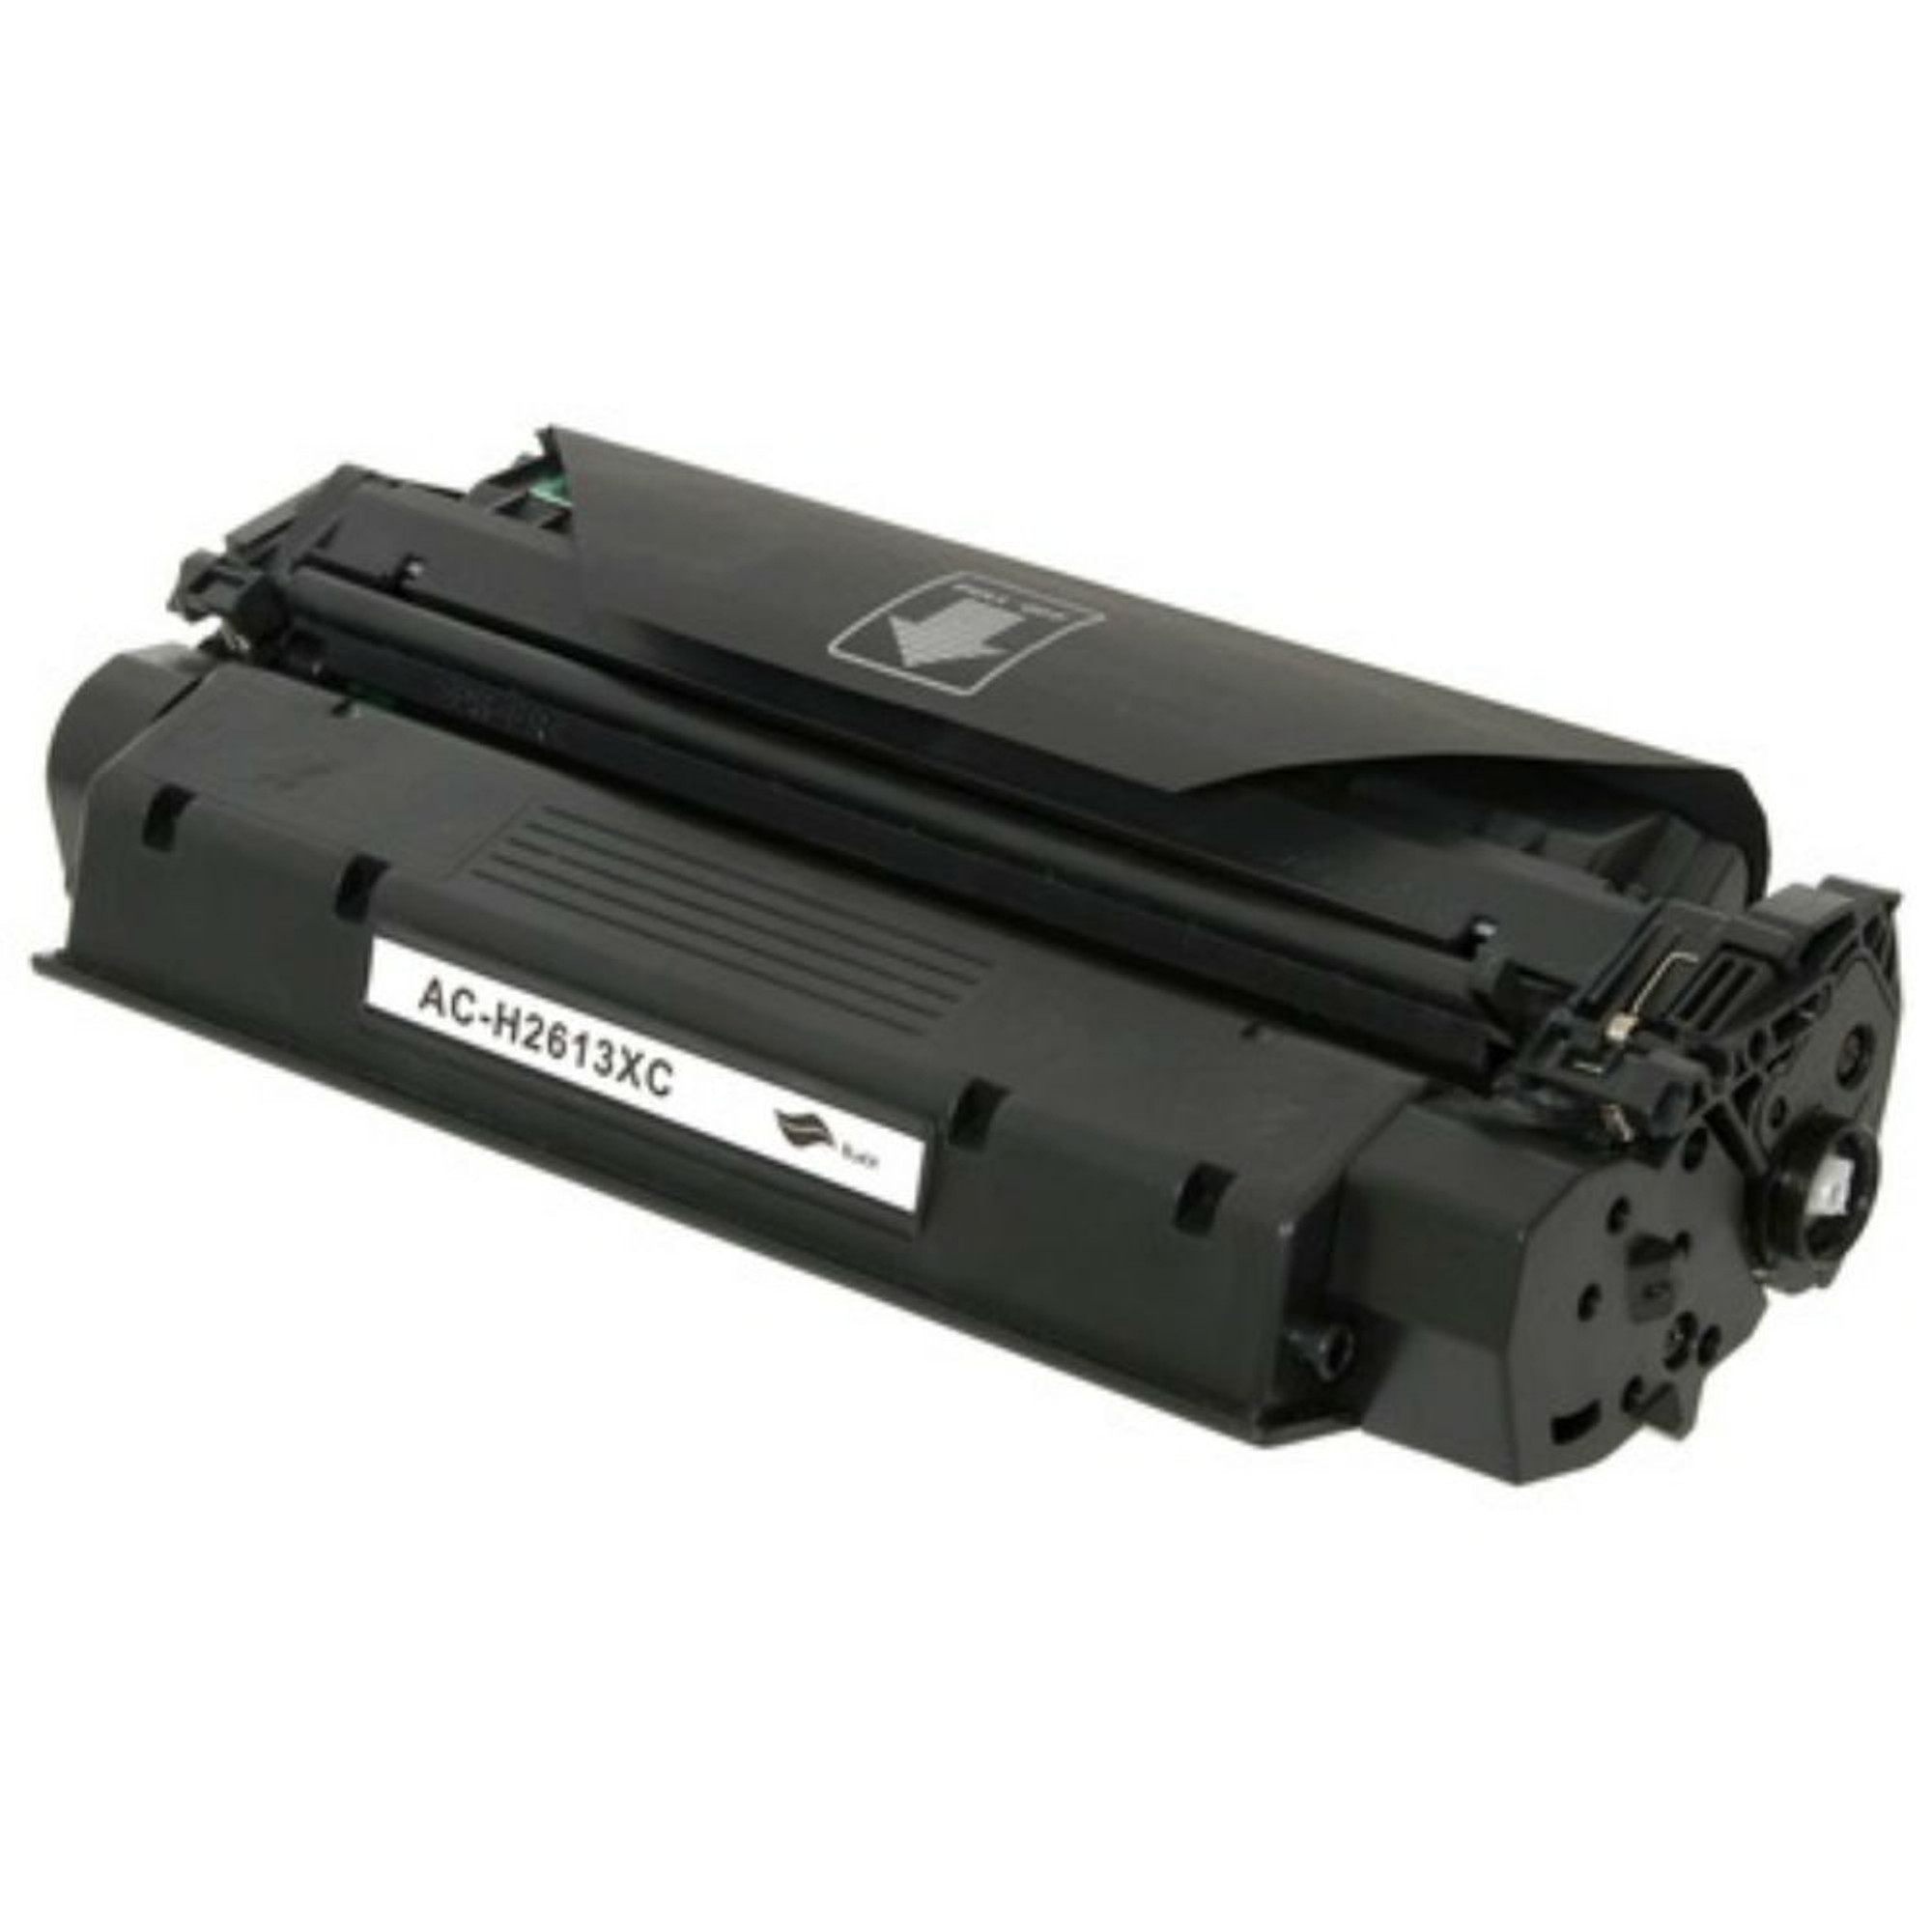 MICR Toner for the HP Laserjet 1300, 1300n, & 1300xi